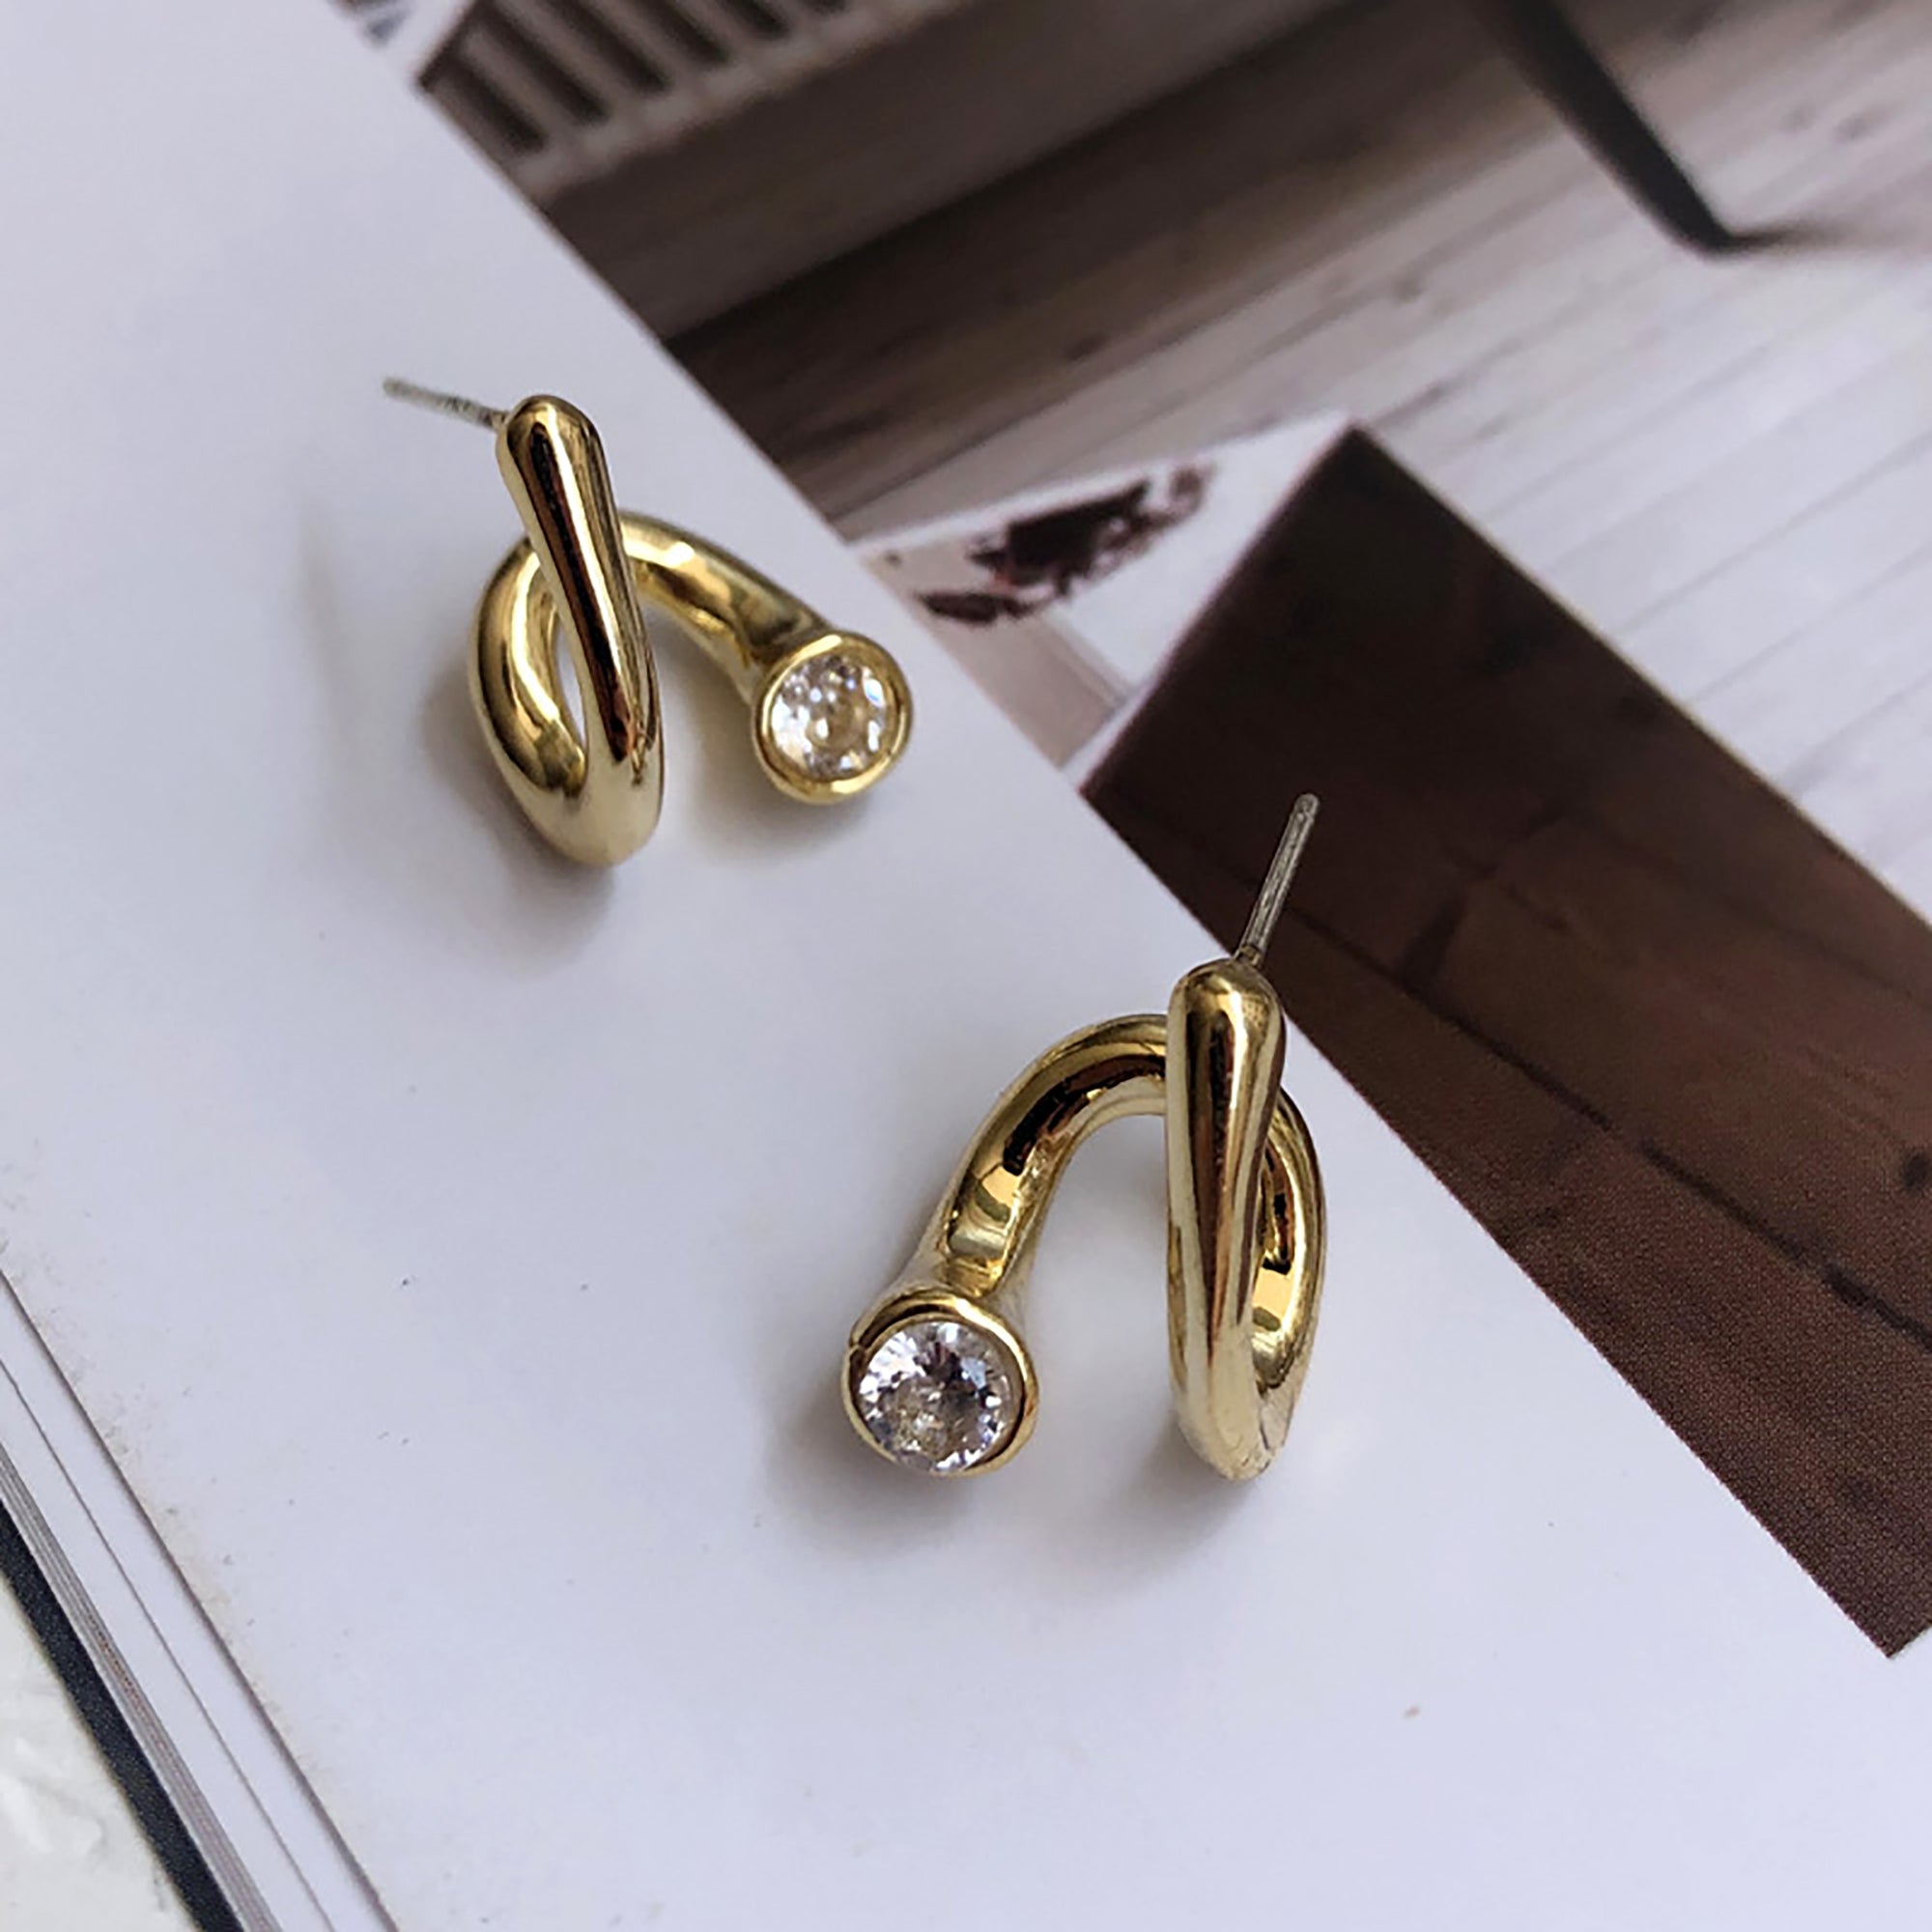 Gold Plated w/ CZ Deco Suspender Ear Cuff Earrings Valentine Day Gift Anniversary birthday wedding